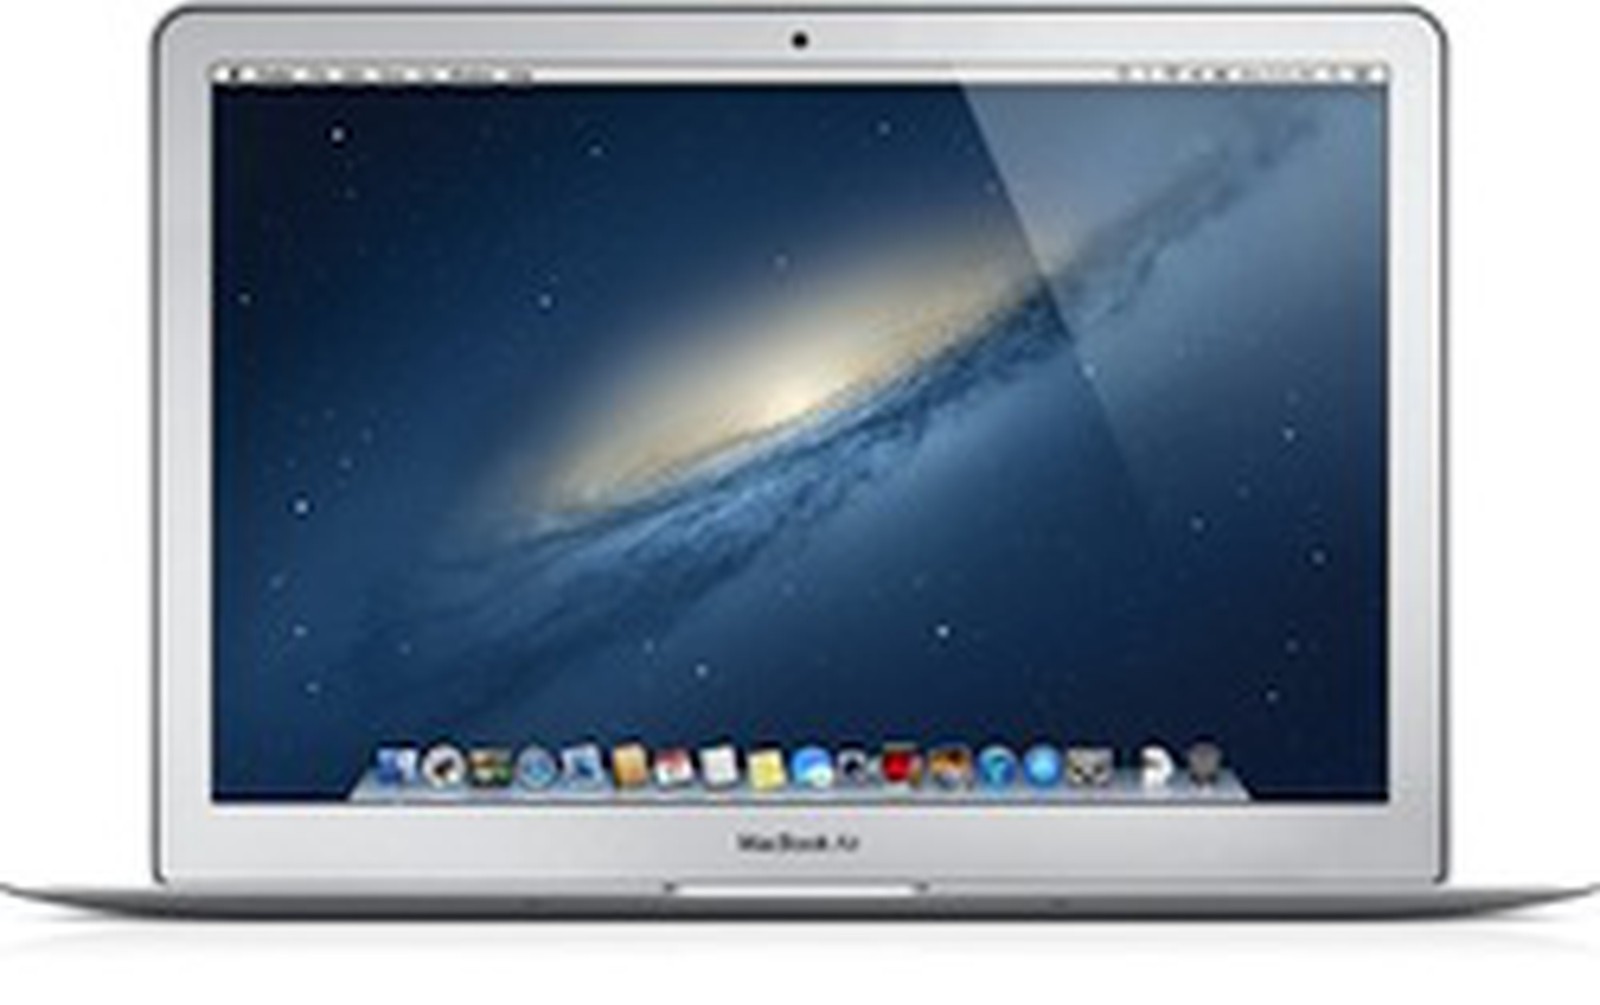 macbook air flash storage firmware update was successful